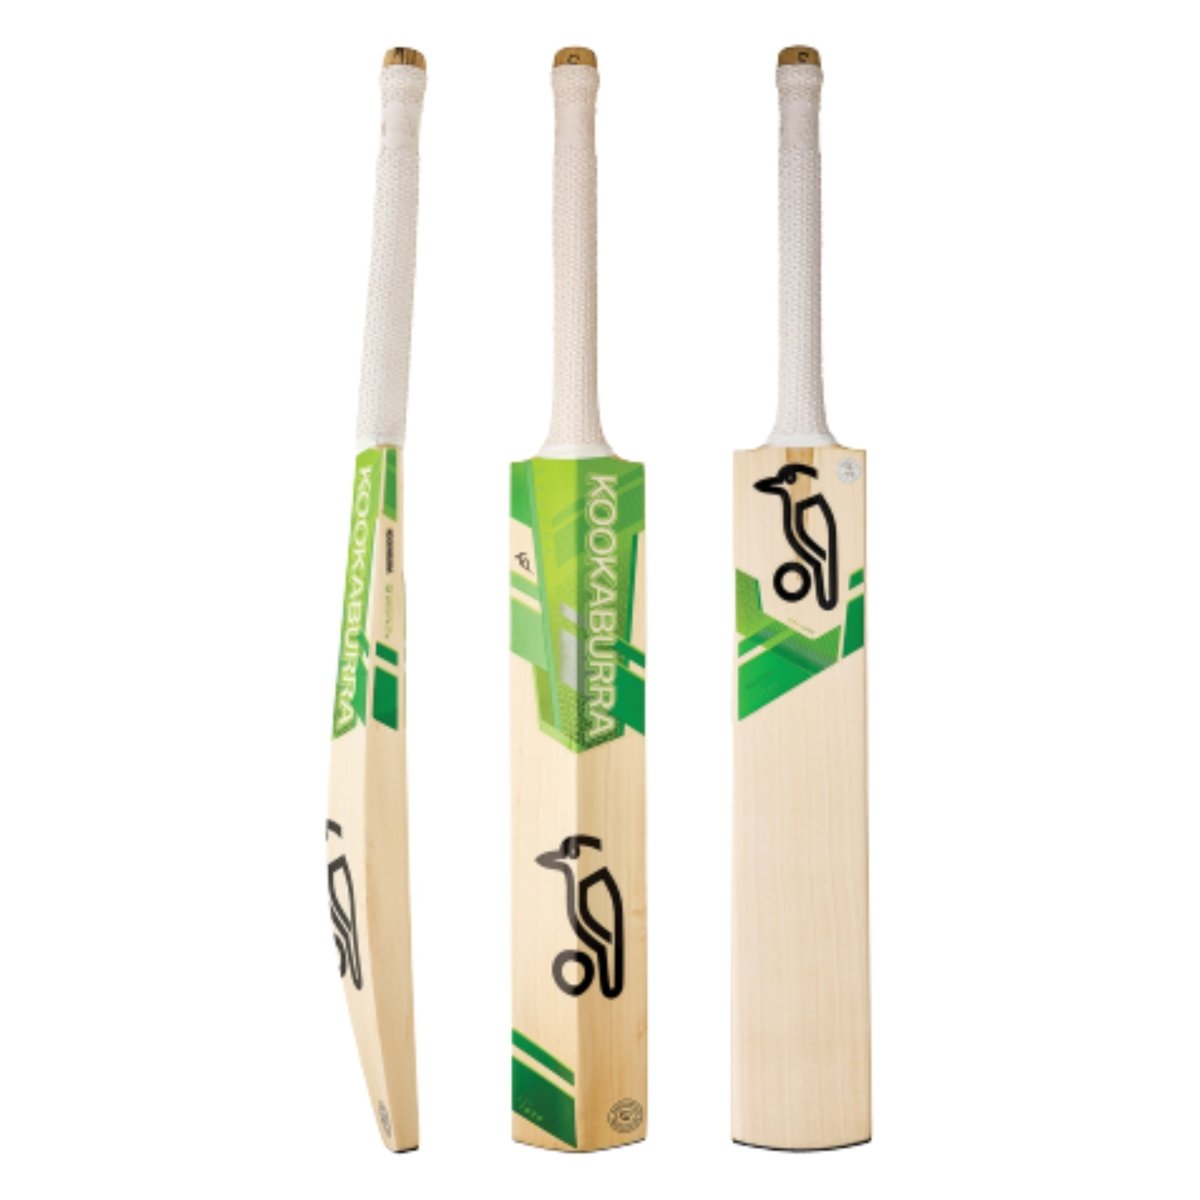 Kookaburra Kahuna Pro 3.0 Junior English Willow Cricket Bat.